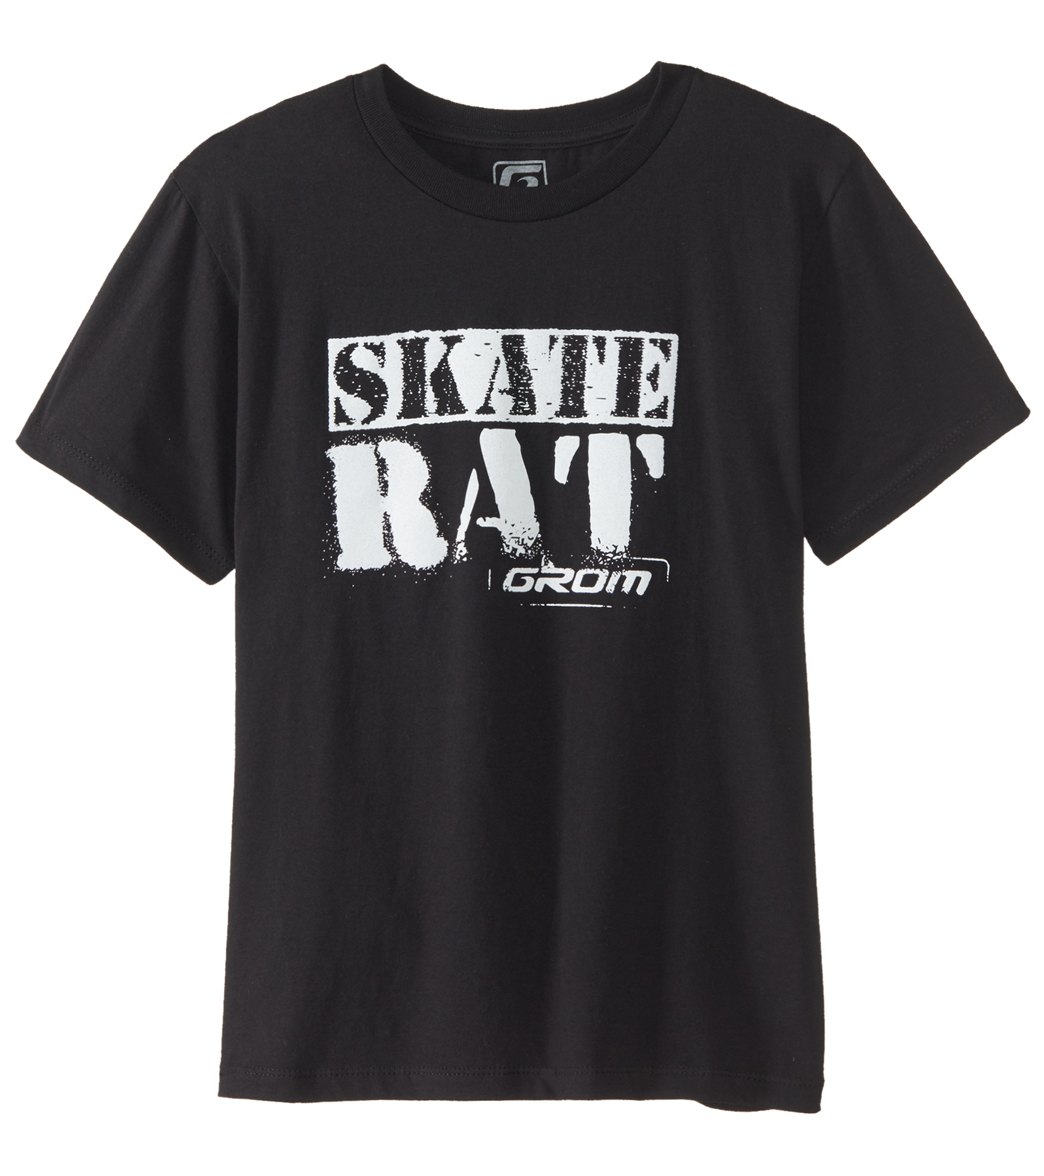 Grom Boys' Skate Rat Short Sleeve Tee Shirt - Black Large Cotton - Swimoutlet.com